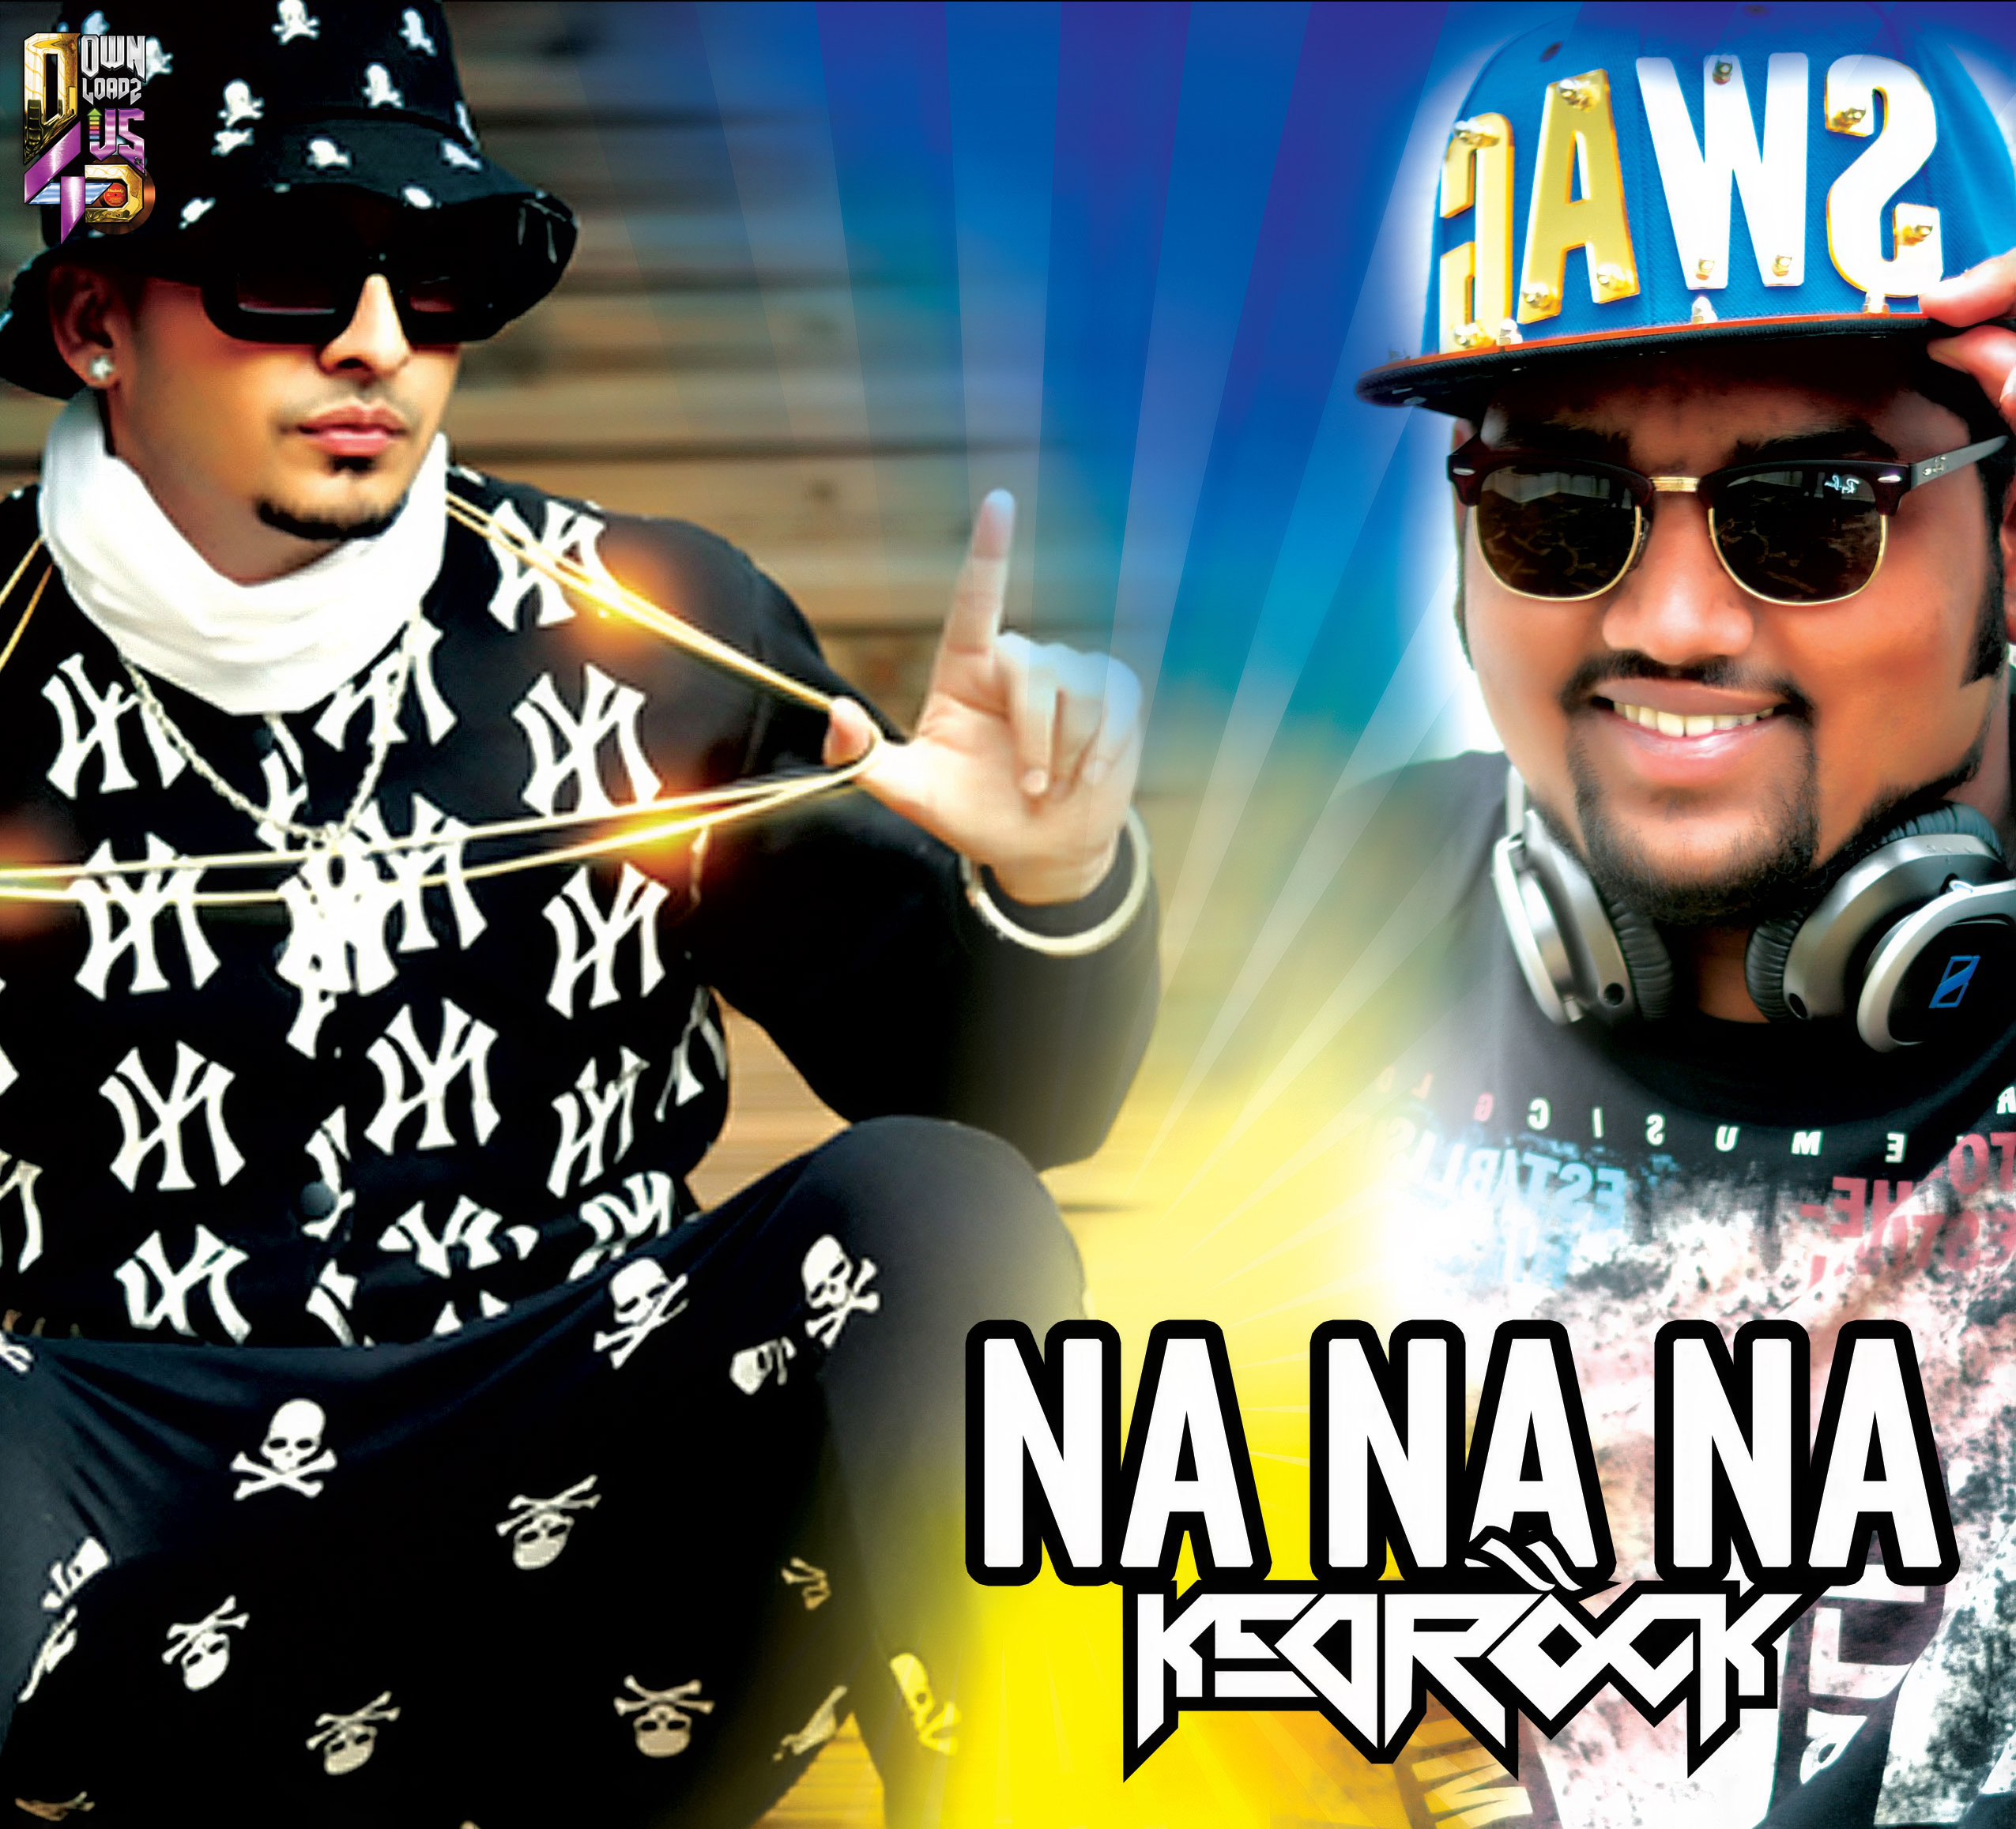 Na Na Na - Kedrock Remix Downloads4Djs.